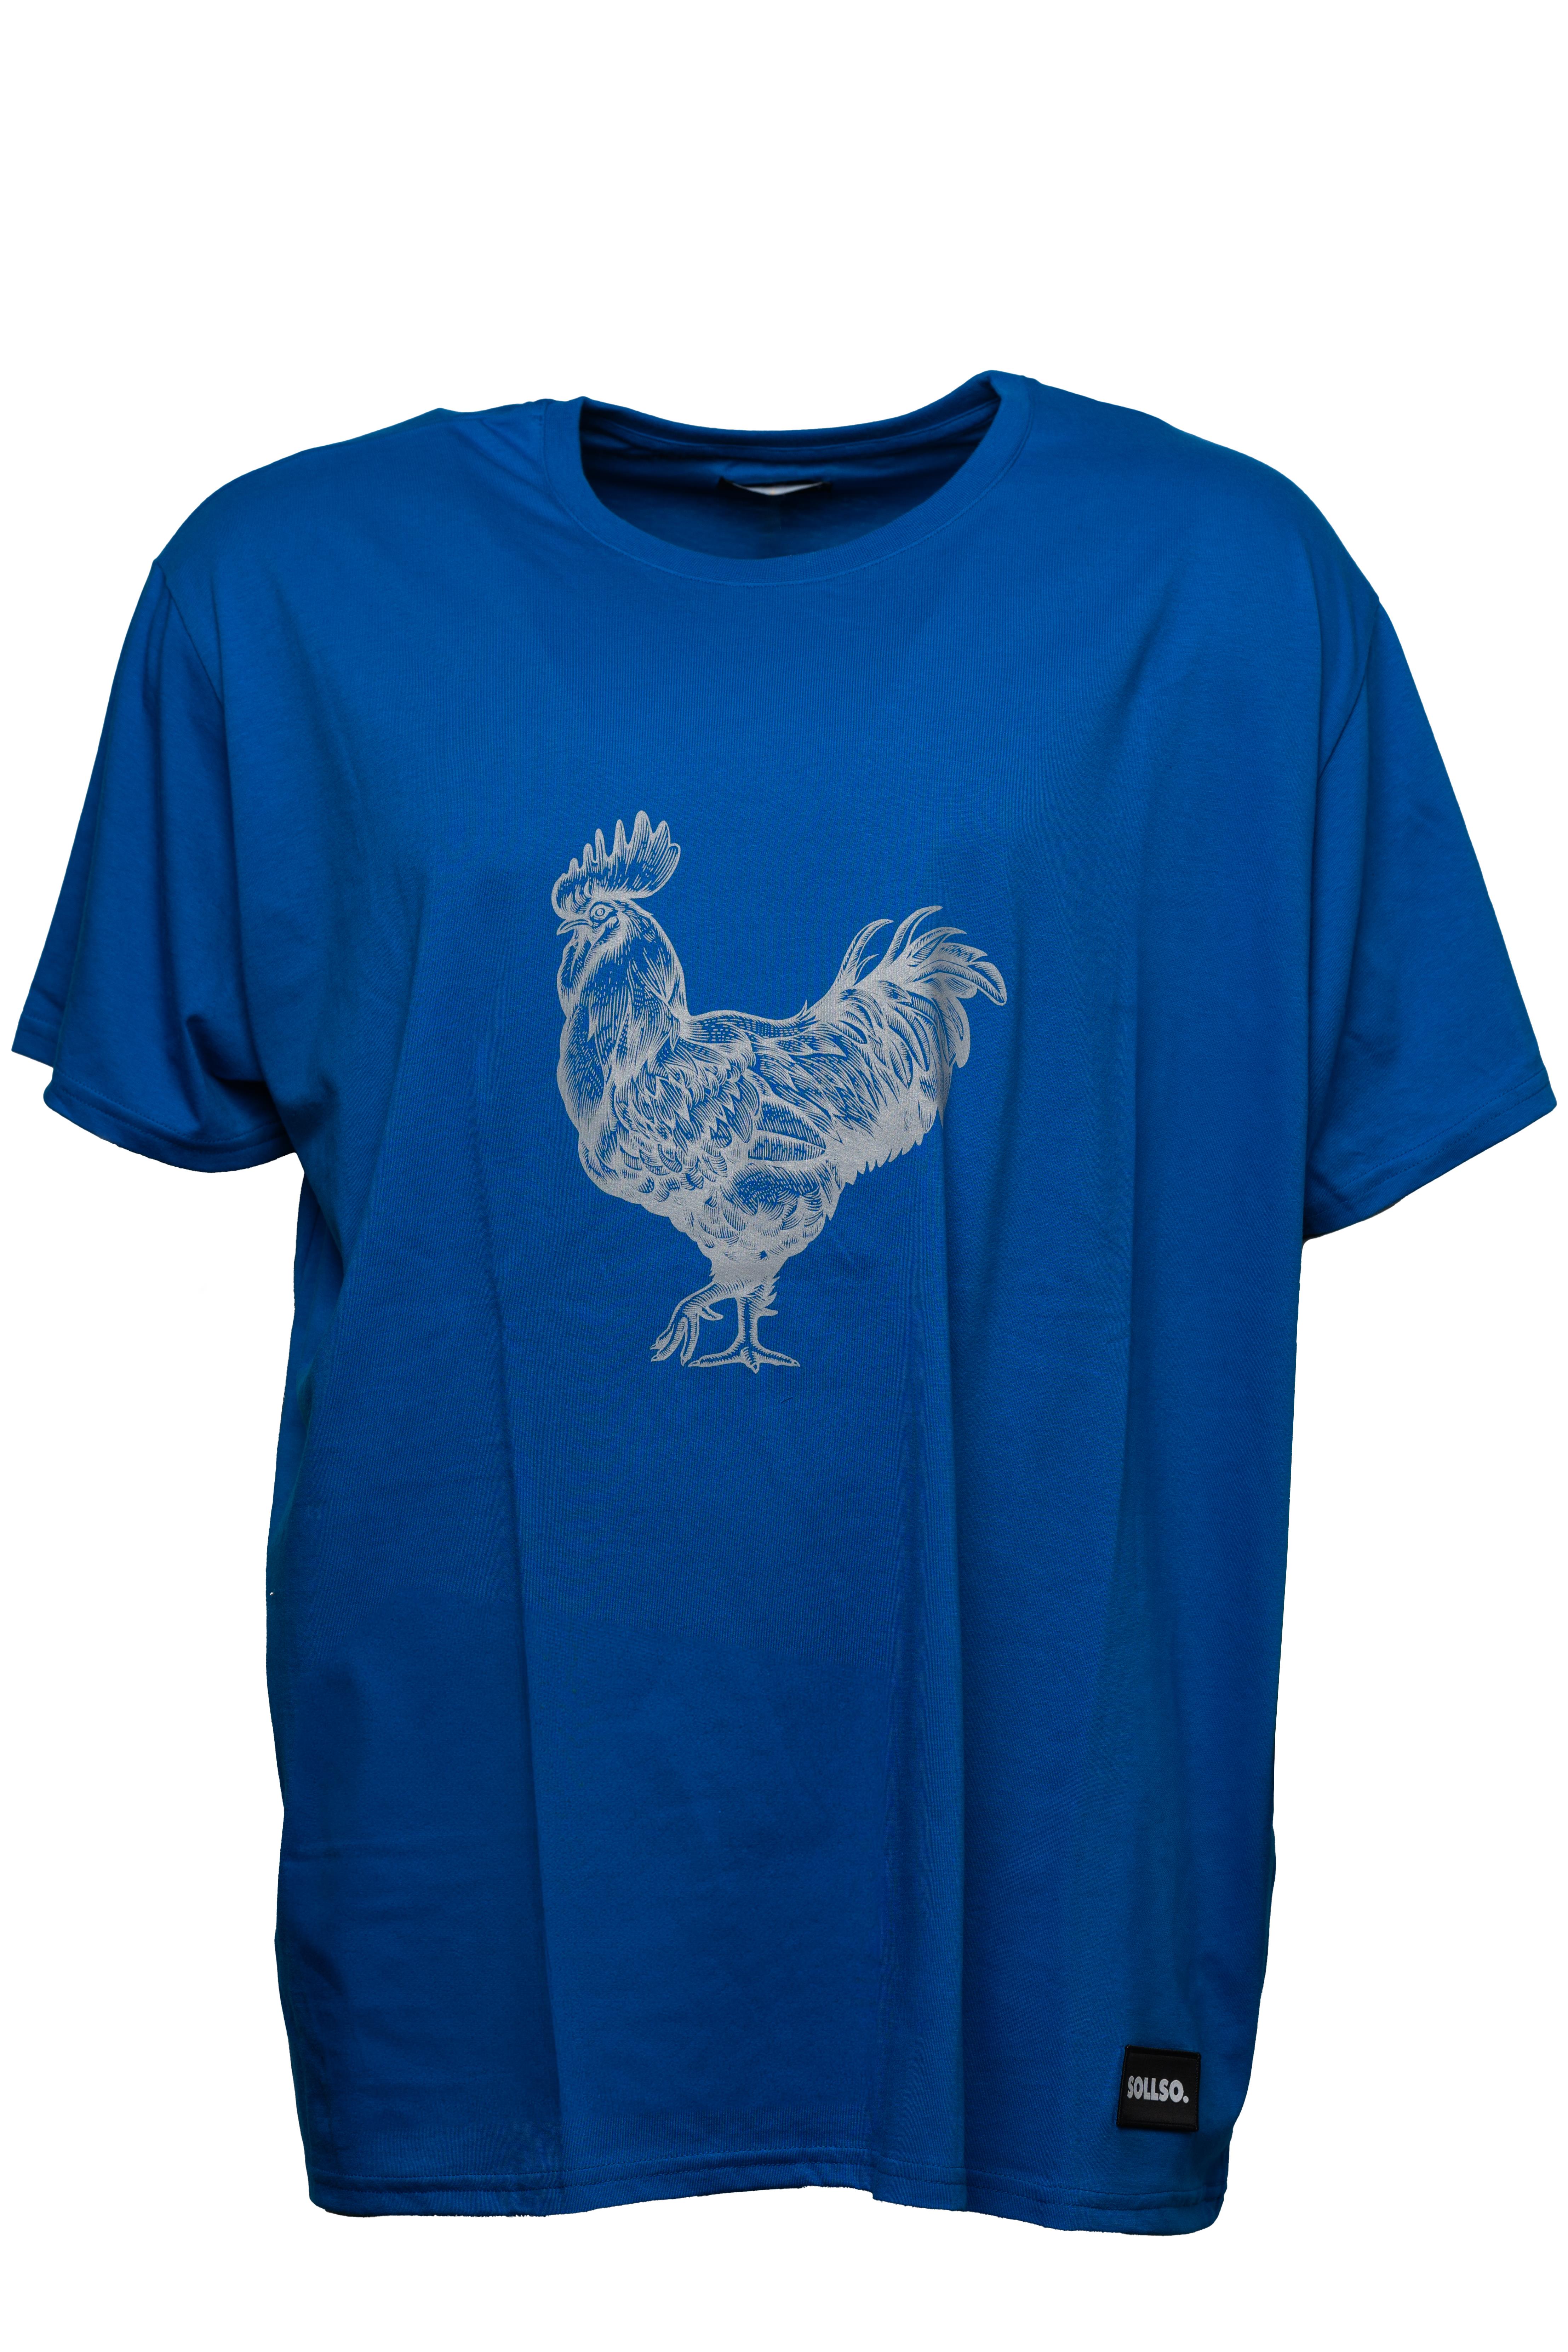 SOLLSO. T-Shirt "Rooster", Farbe Ocean Blue, Größe 9XL